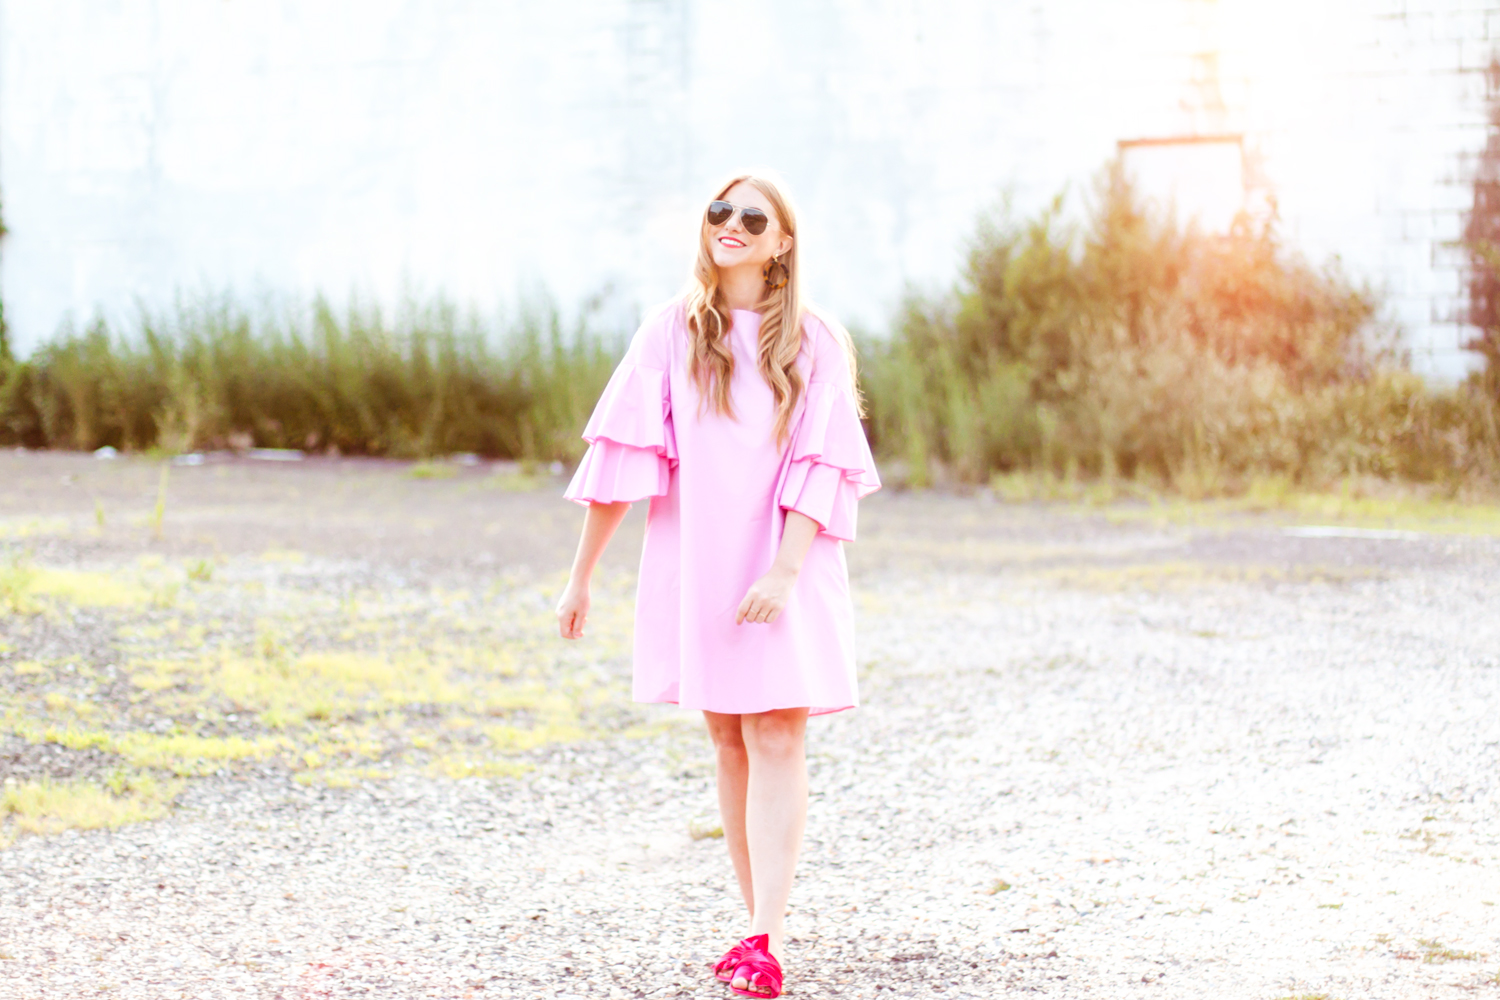 zara pink frill dress